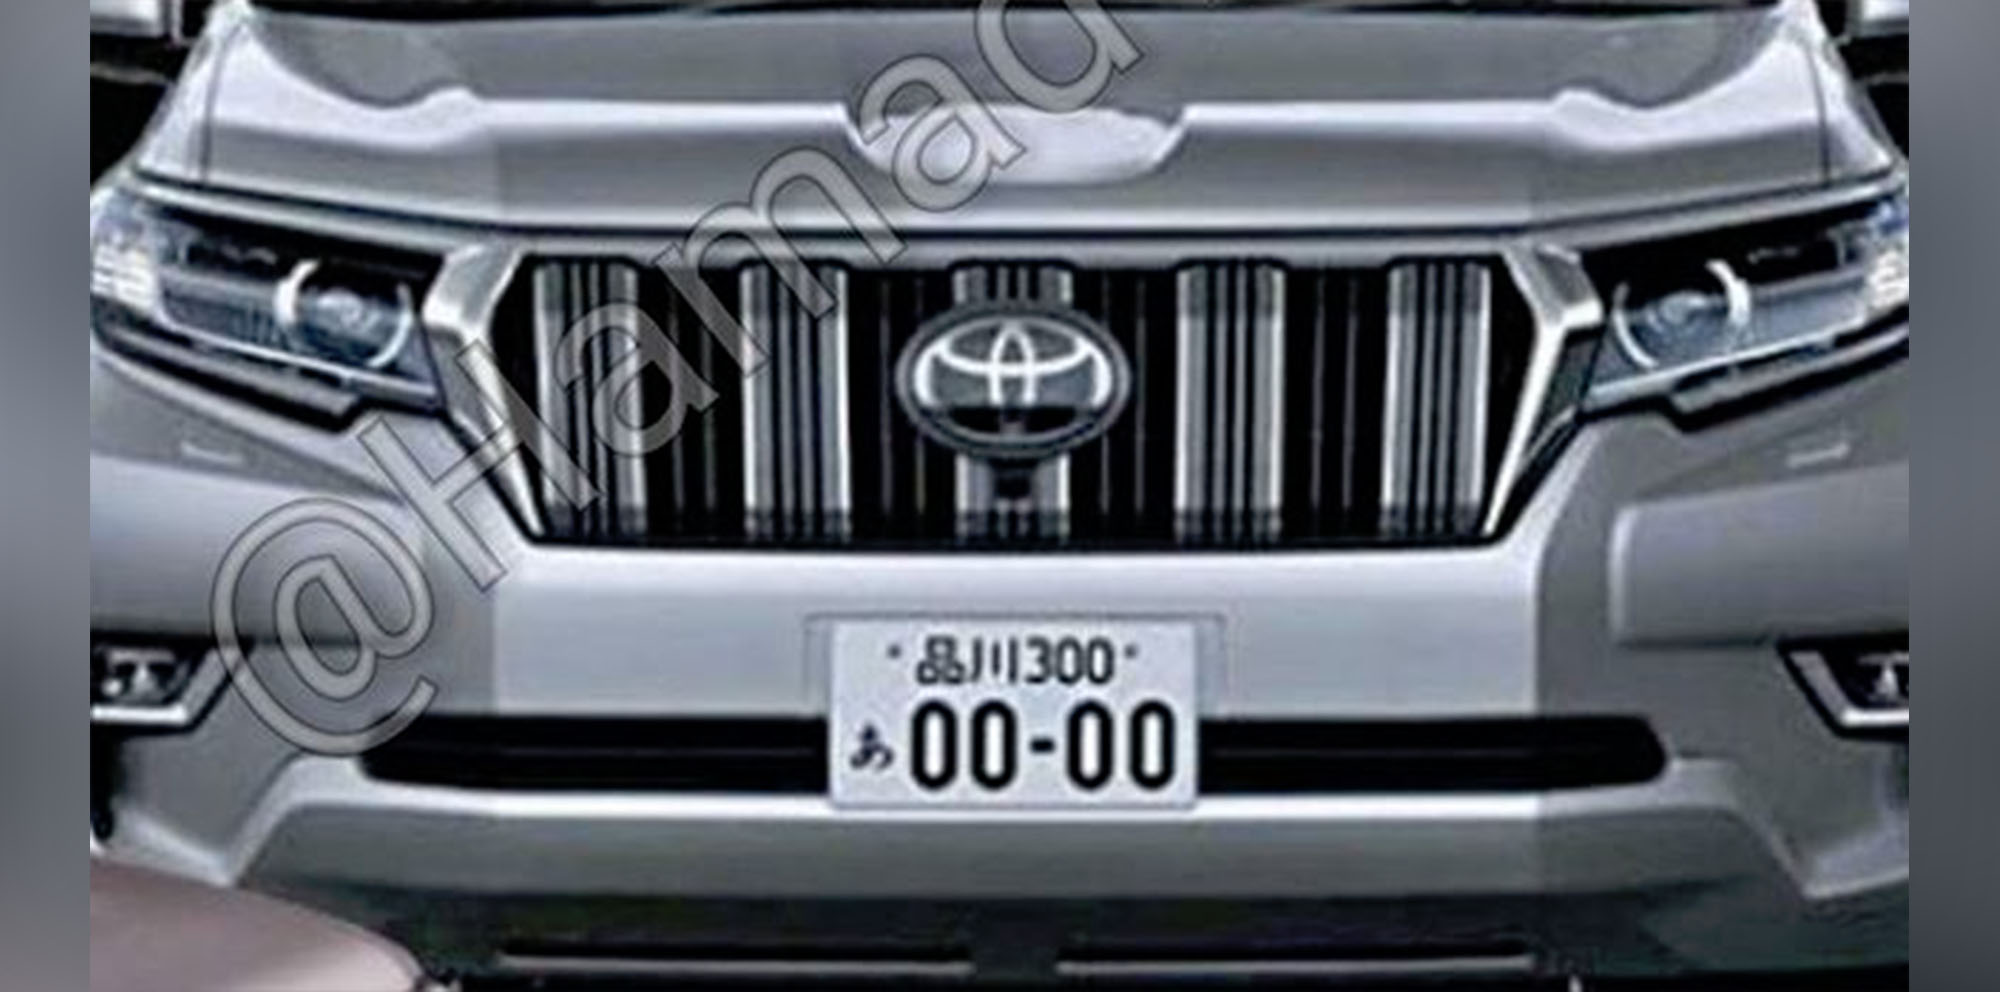 2018 Toyota Prado facelift leaked - UPDATE - Photos (1 of 8)